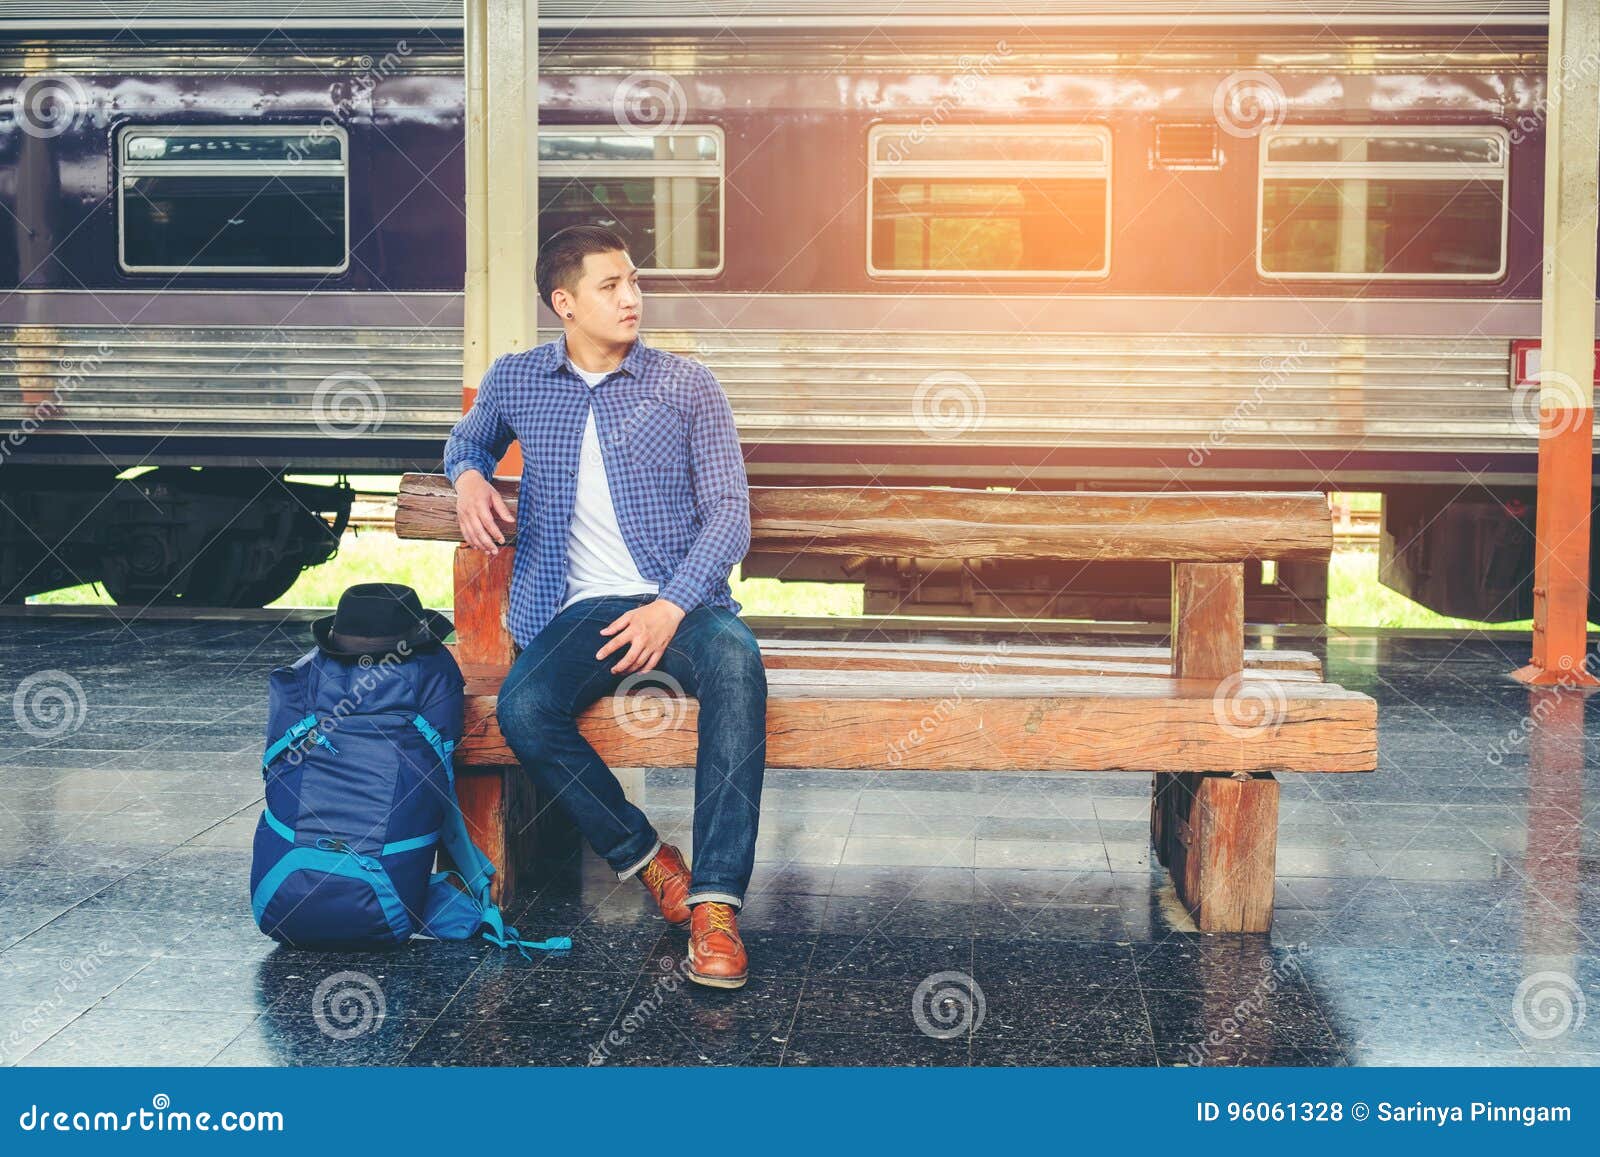 traveler man waits train on railway platform